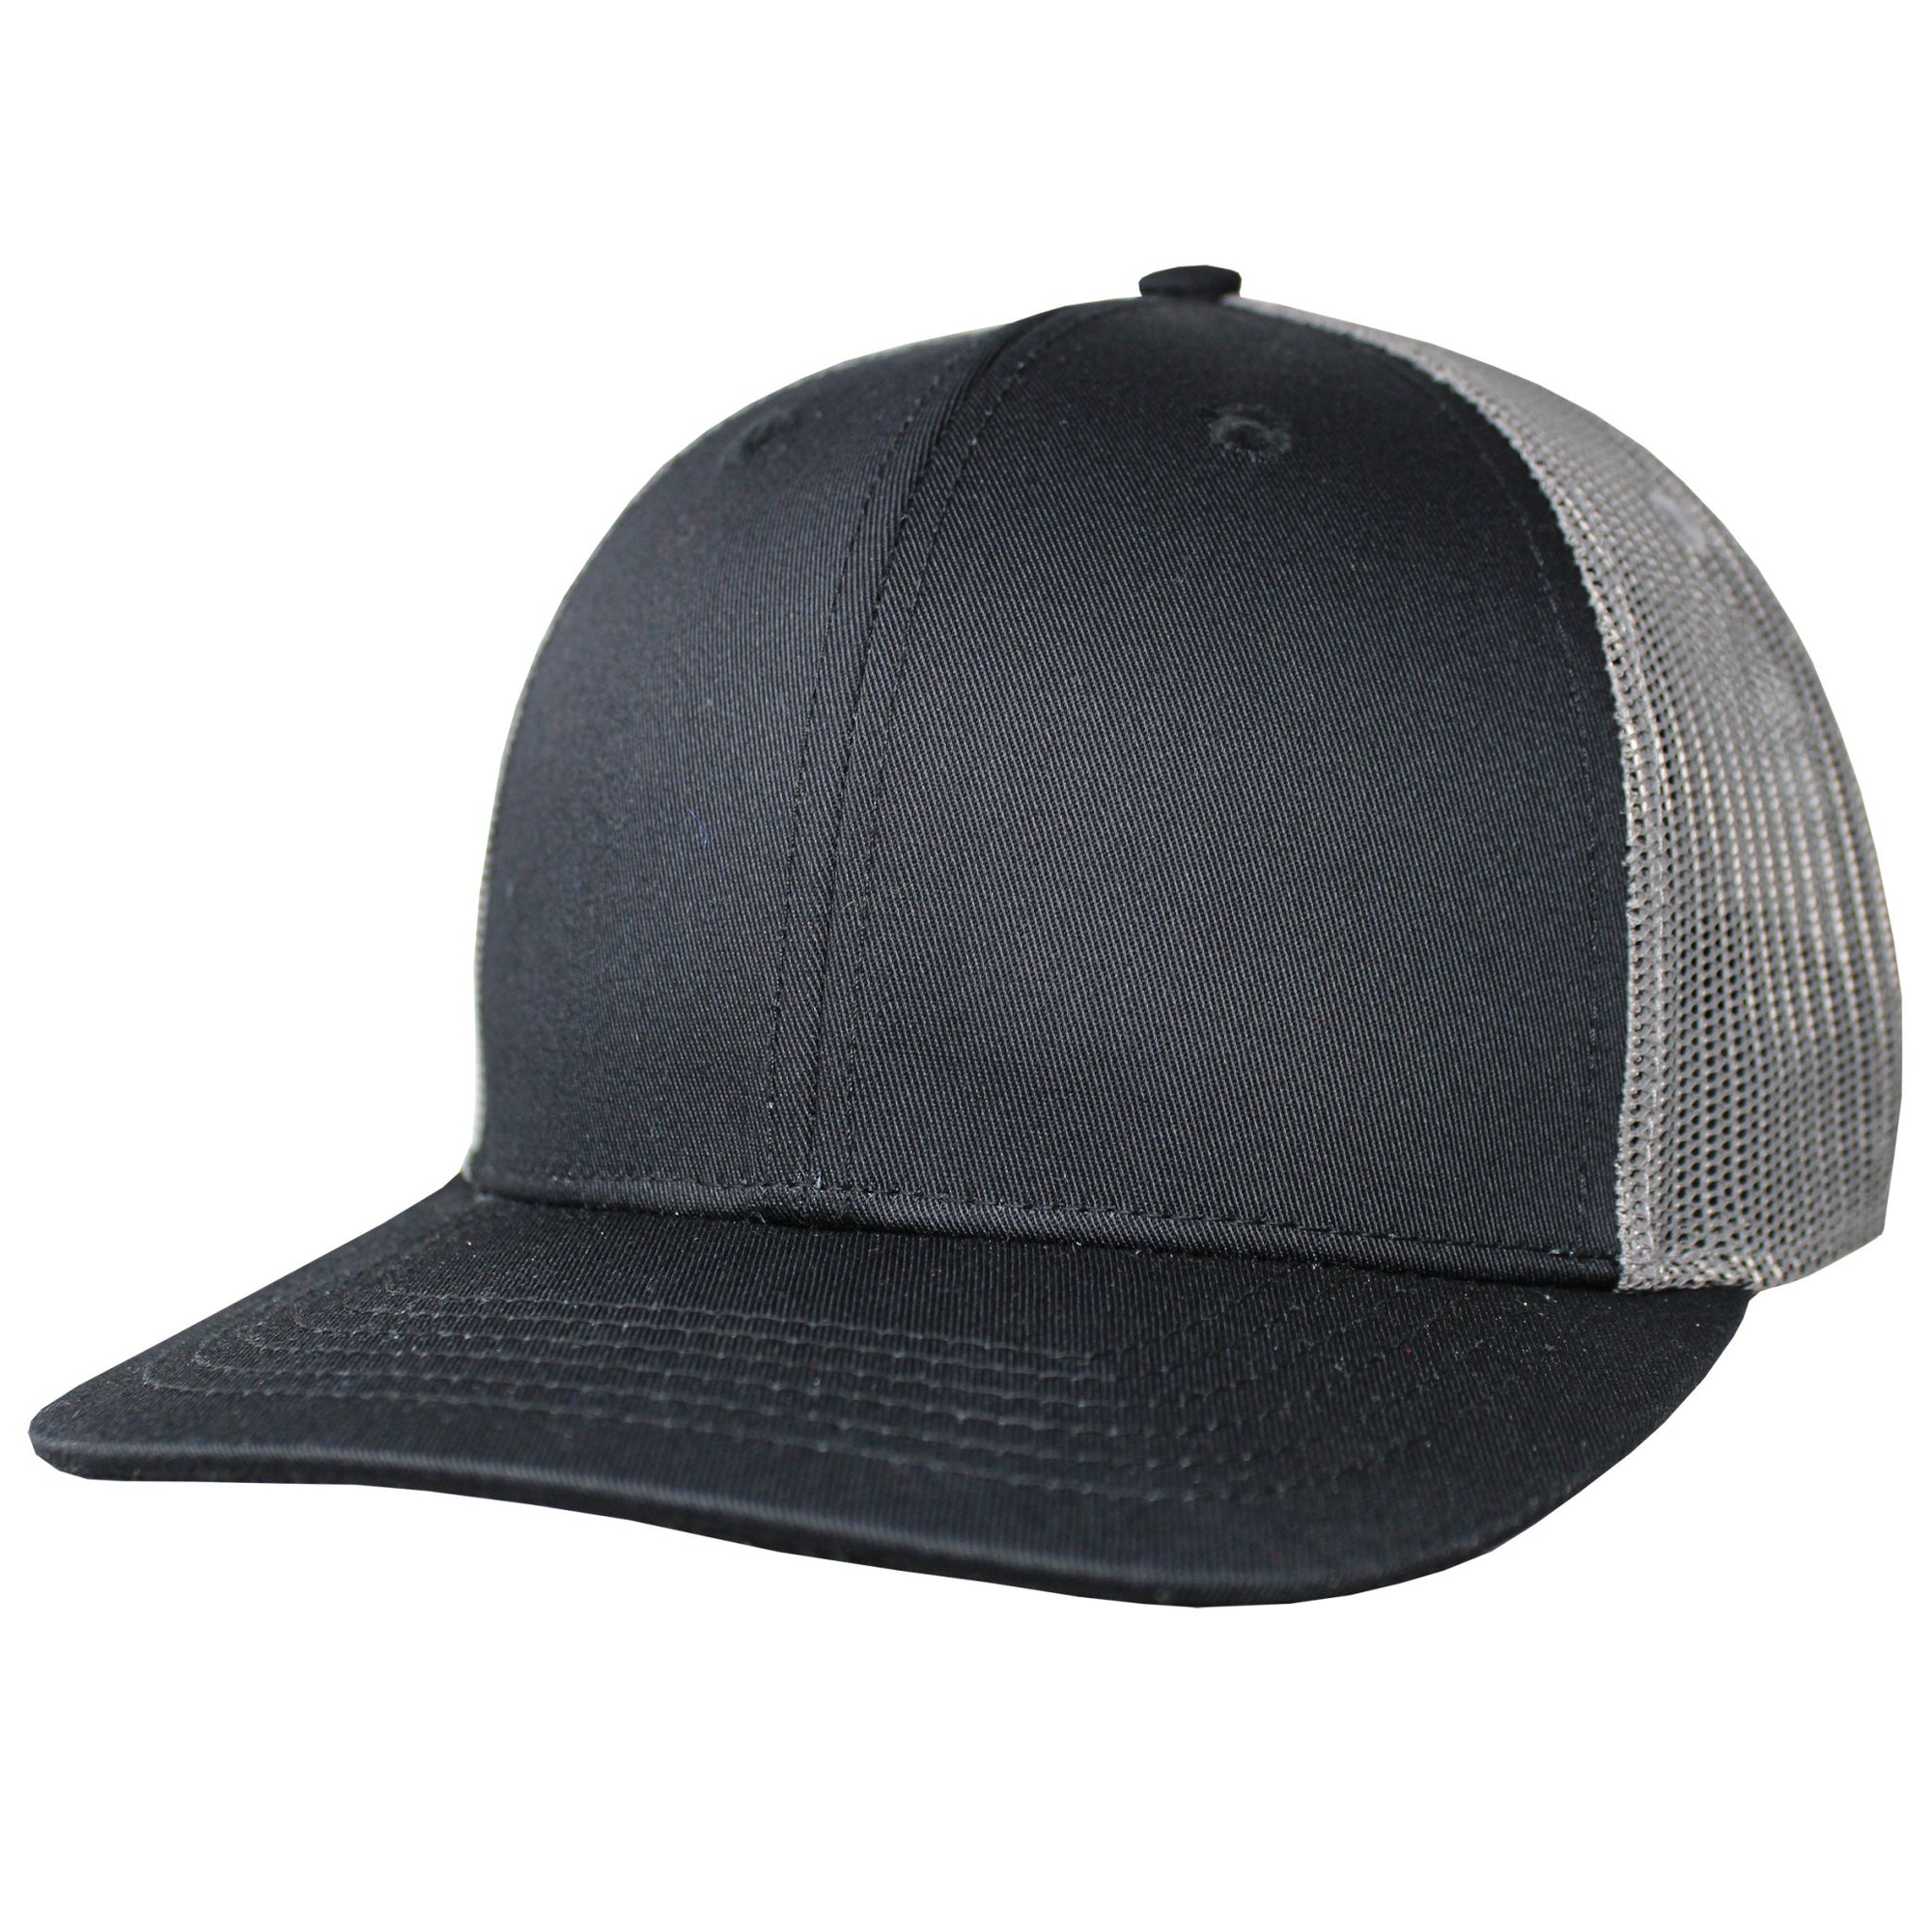 Blank Headwear - BC23 / 6 Panel Performance Trucker Cap - Black/Gray - Black Cat MFG - Hat